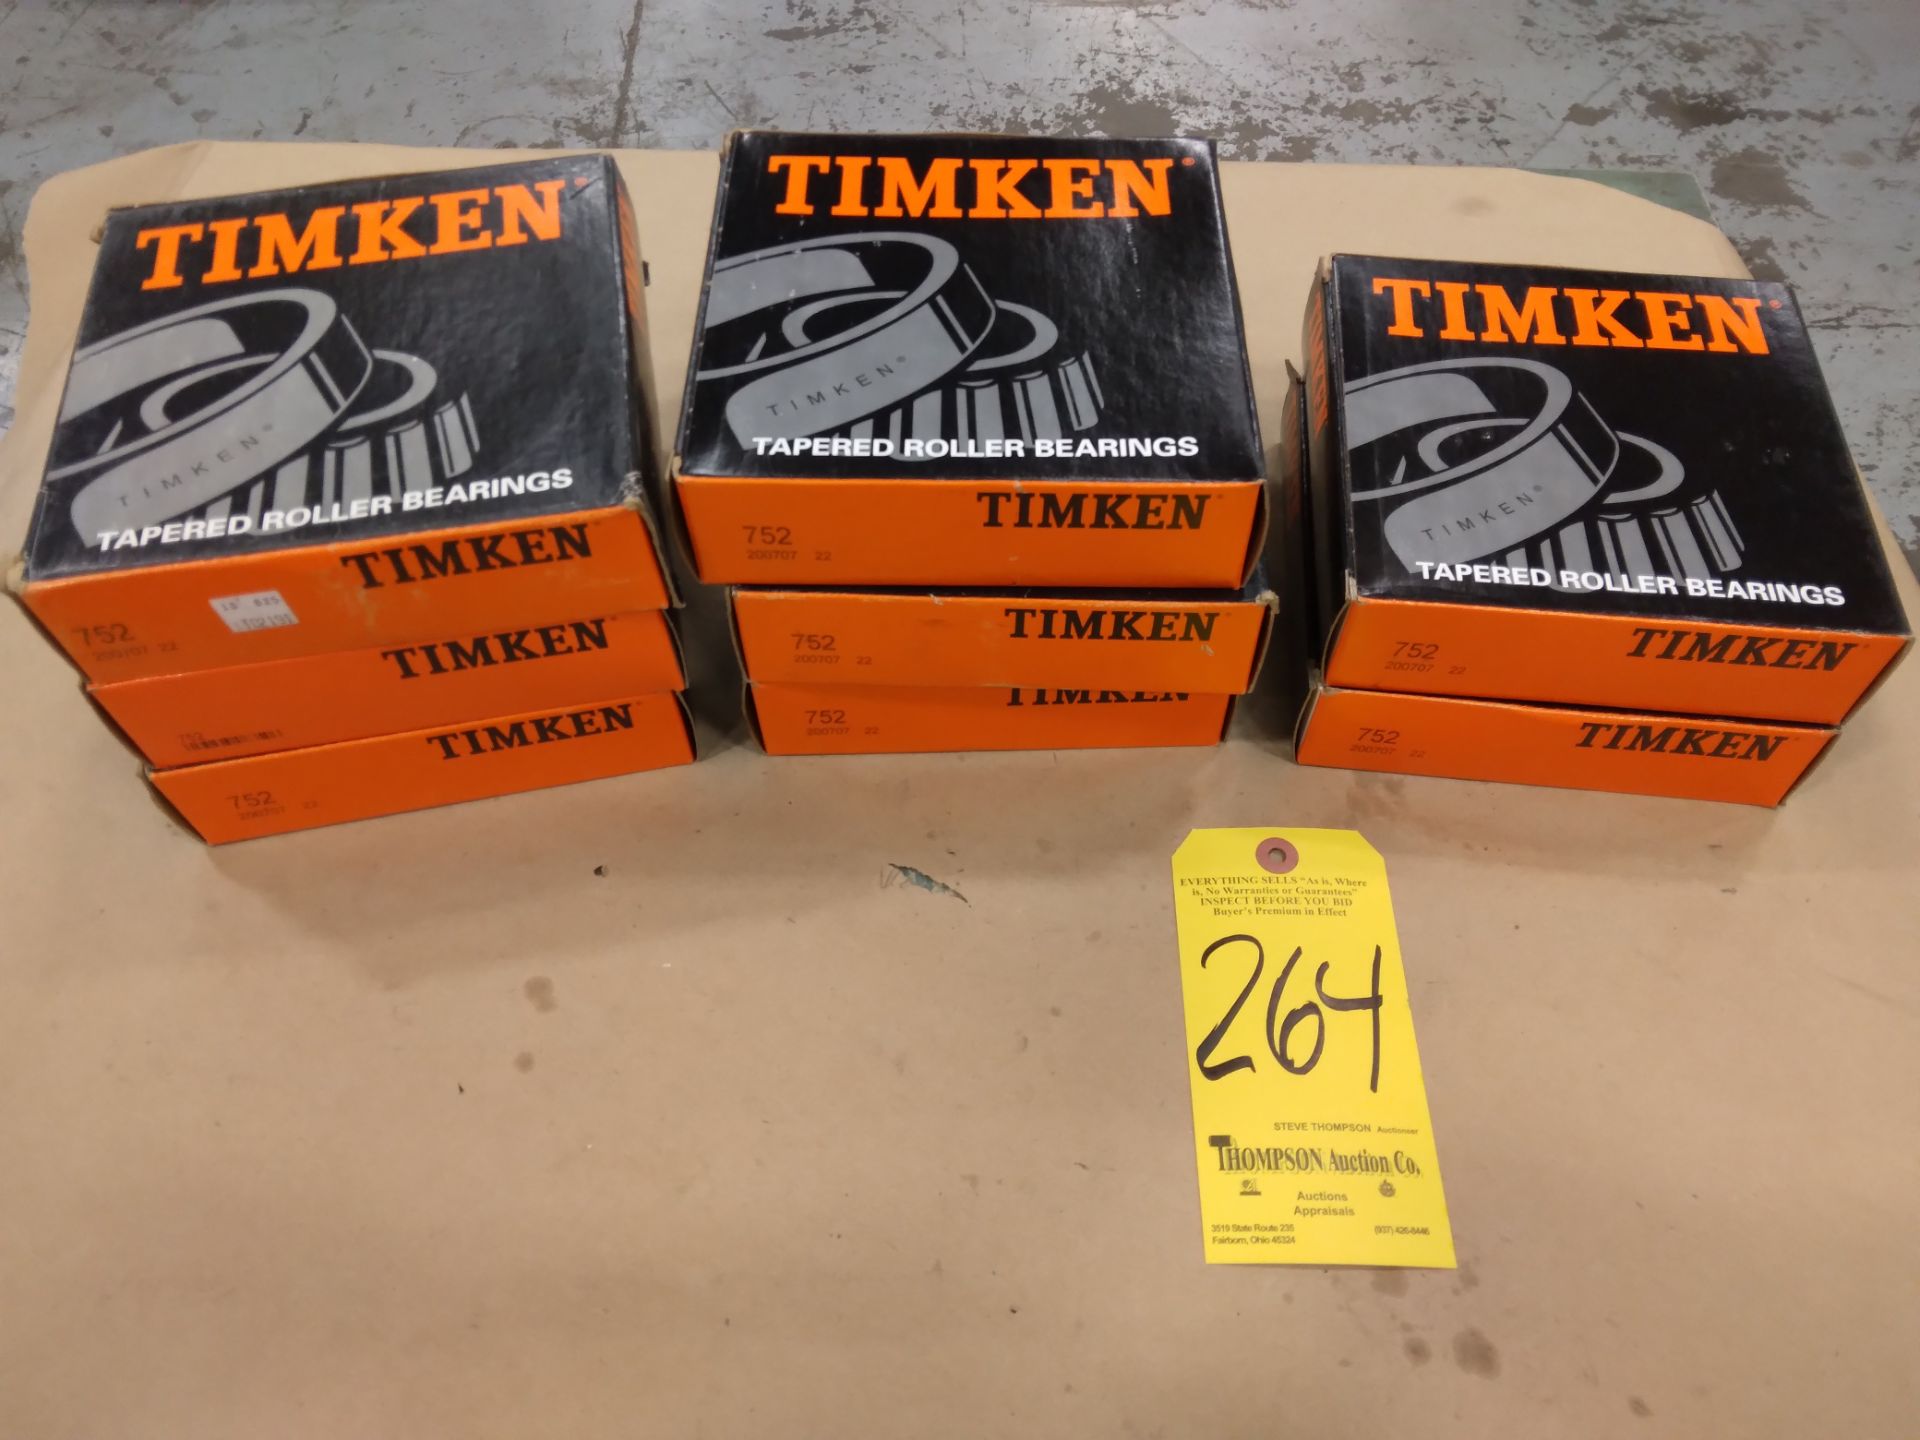 (8) Timken Tapered Roller Bearings, #752-200707-22